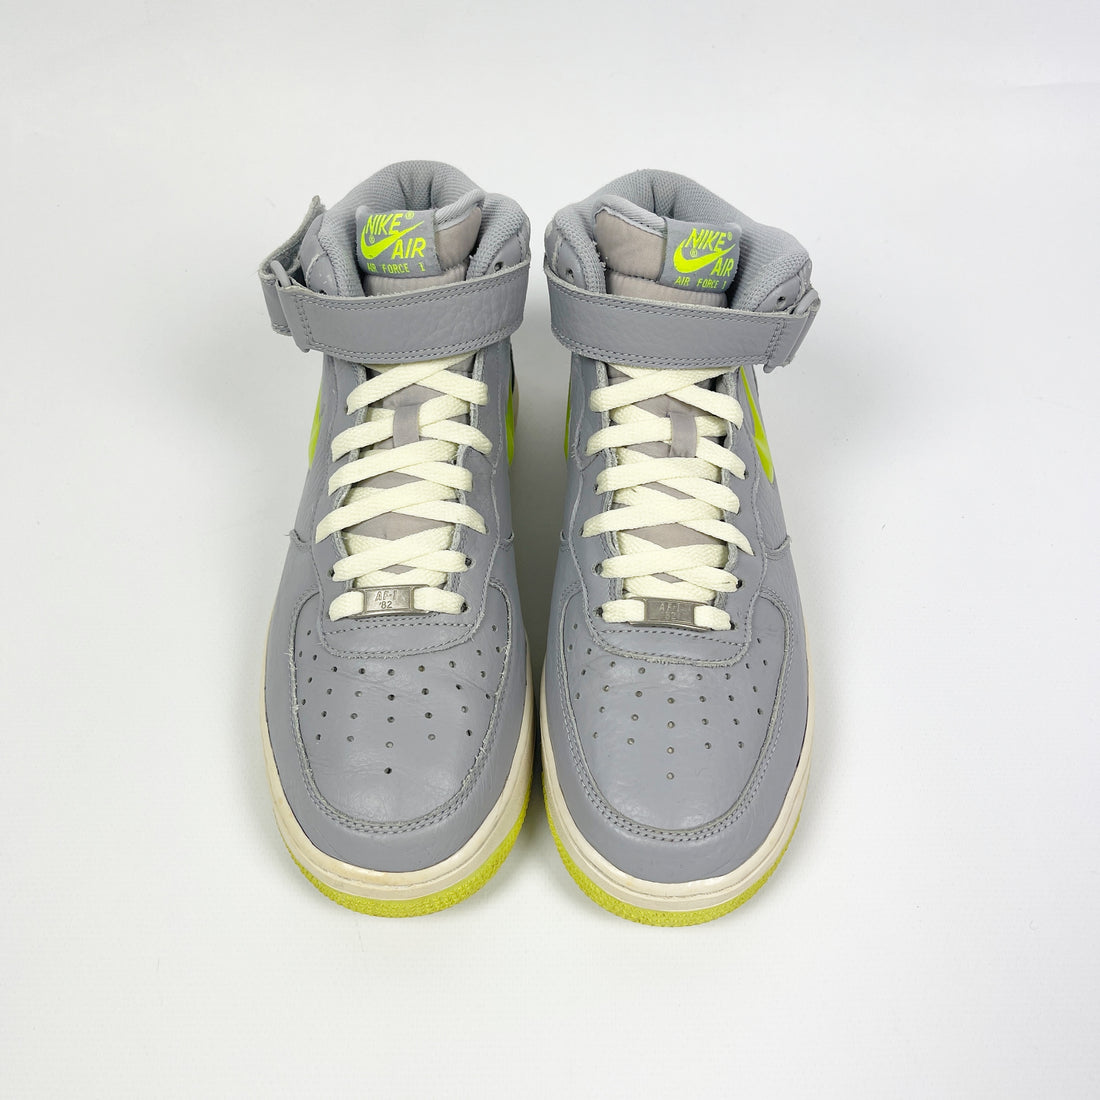 Nike Air Force 1 Mid Jewel "Wolf Grey Volt" 2012 - Vintagetts